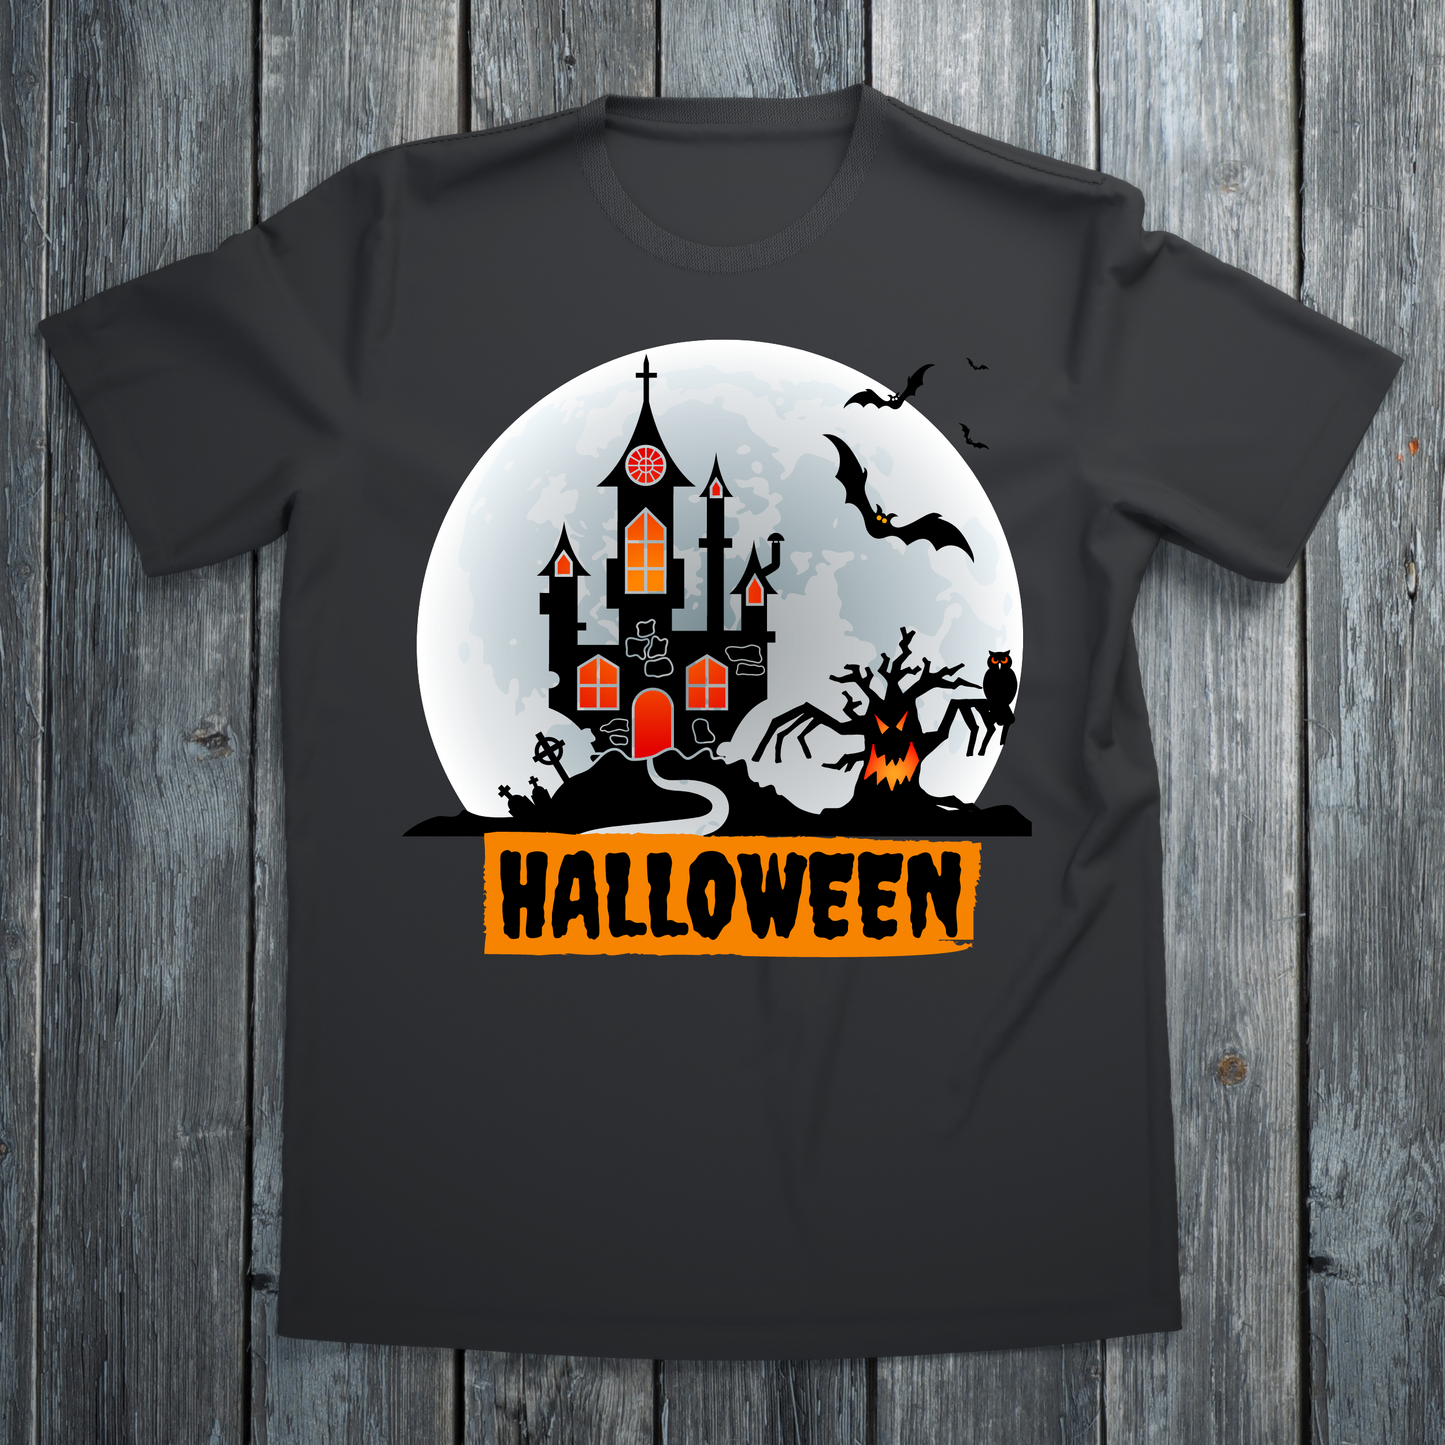 Haunted manor - Men's halloween shirt - Premium t-shirt from Lees Krazy Teez - Just $24.95! Shop now at Lees Krazy Teez